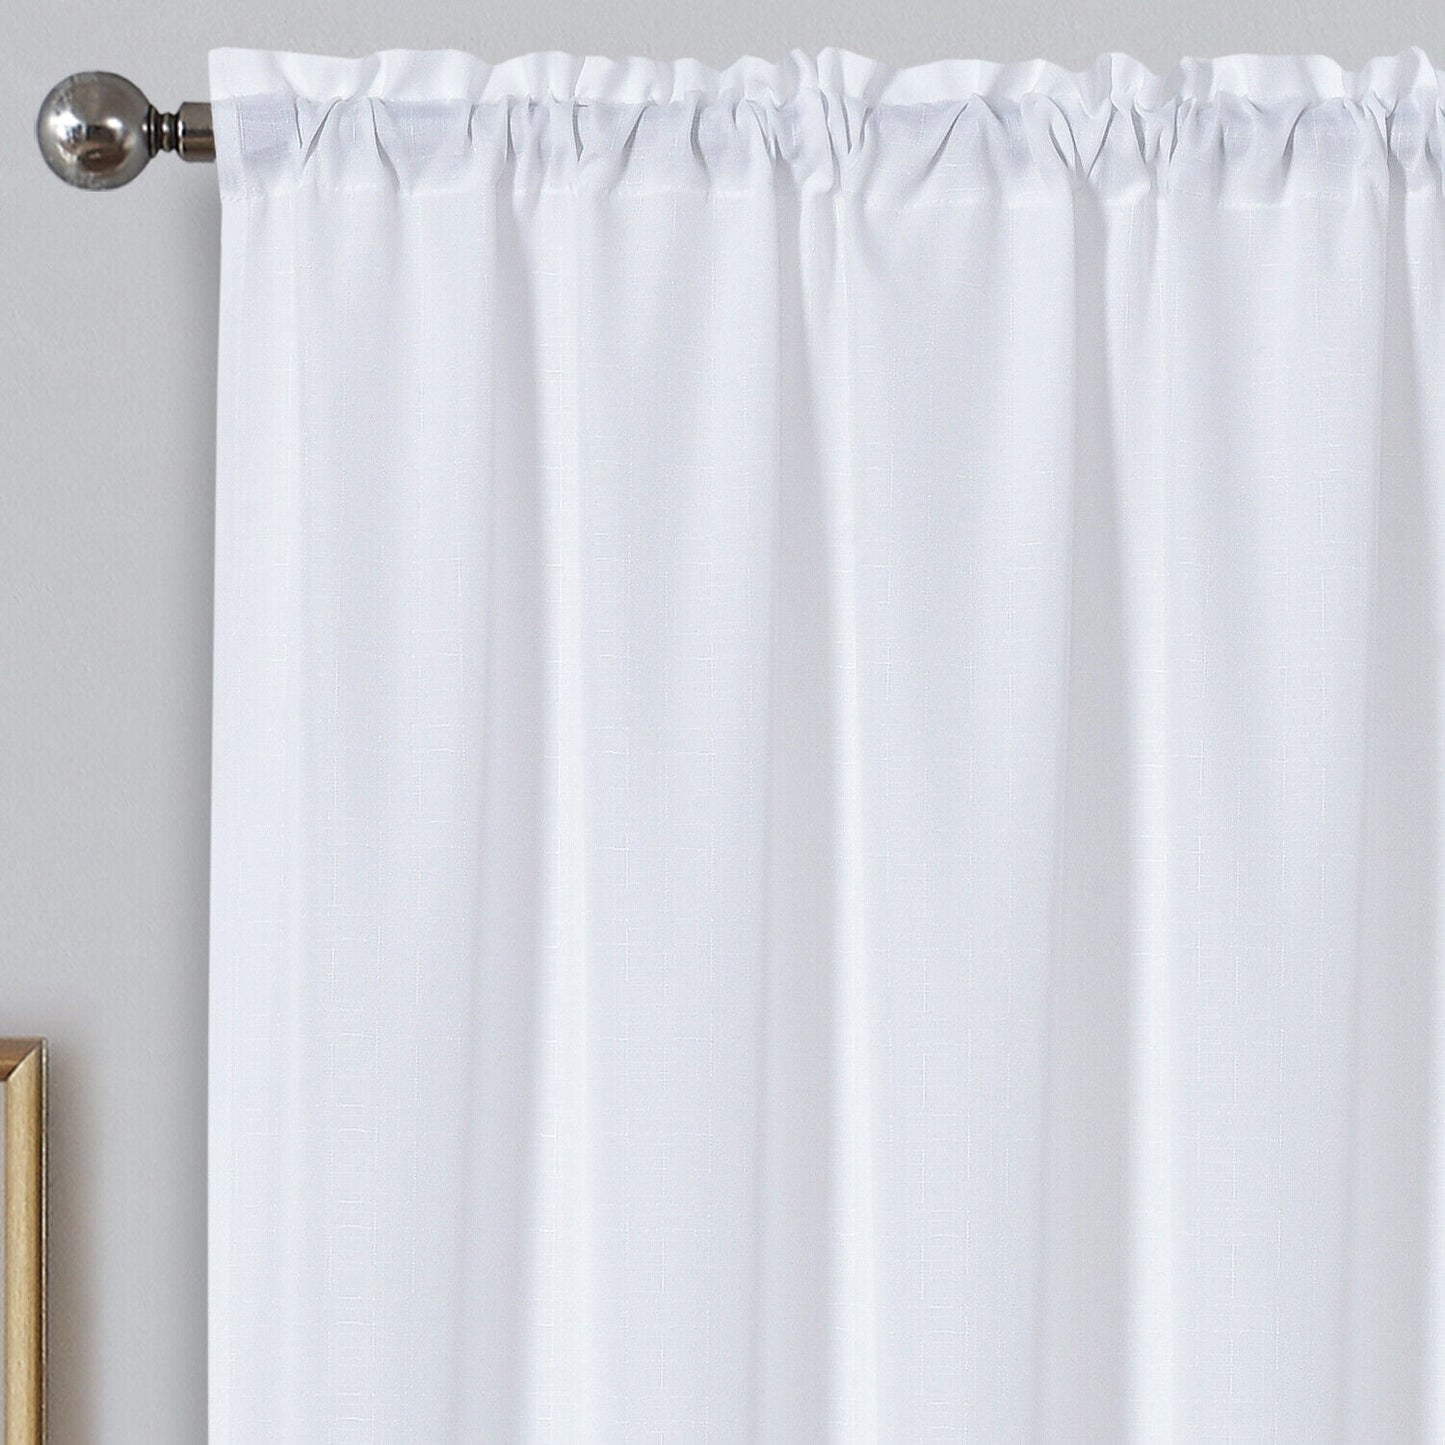 Linen Look Voile 59" x 72" White Window Curtain Drapes Textured Plain Slot Top